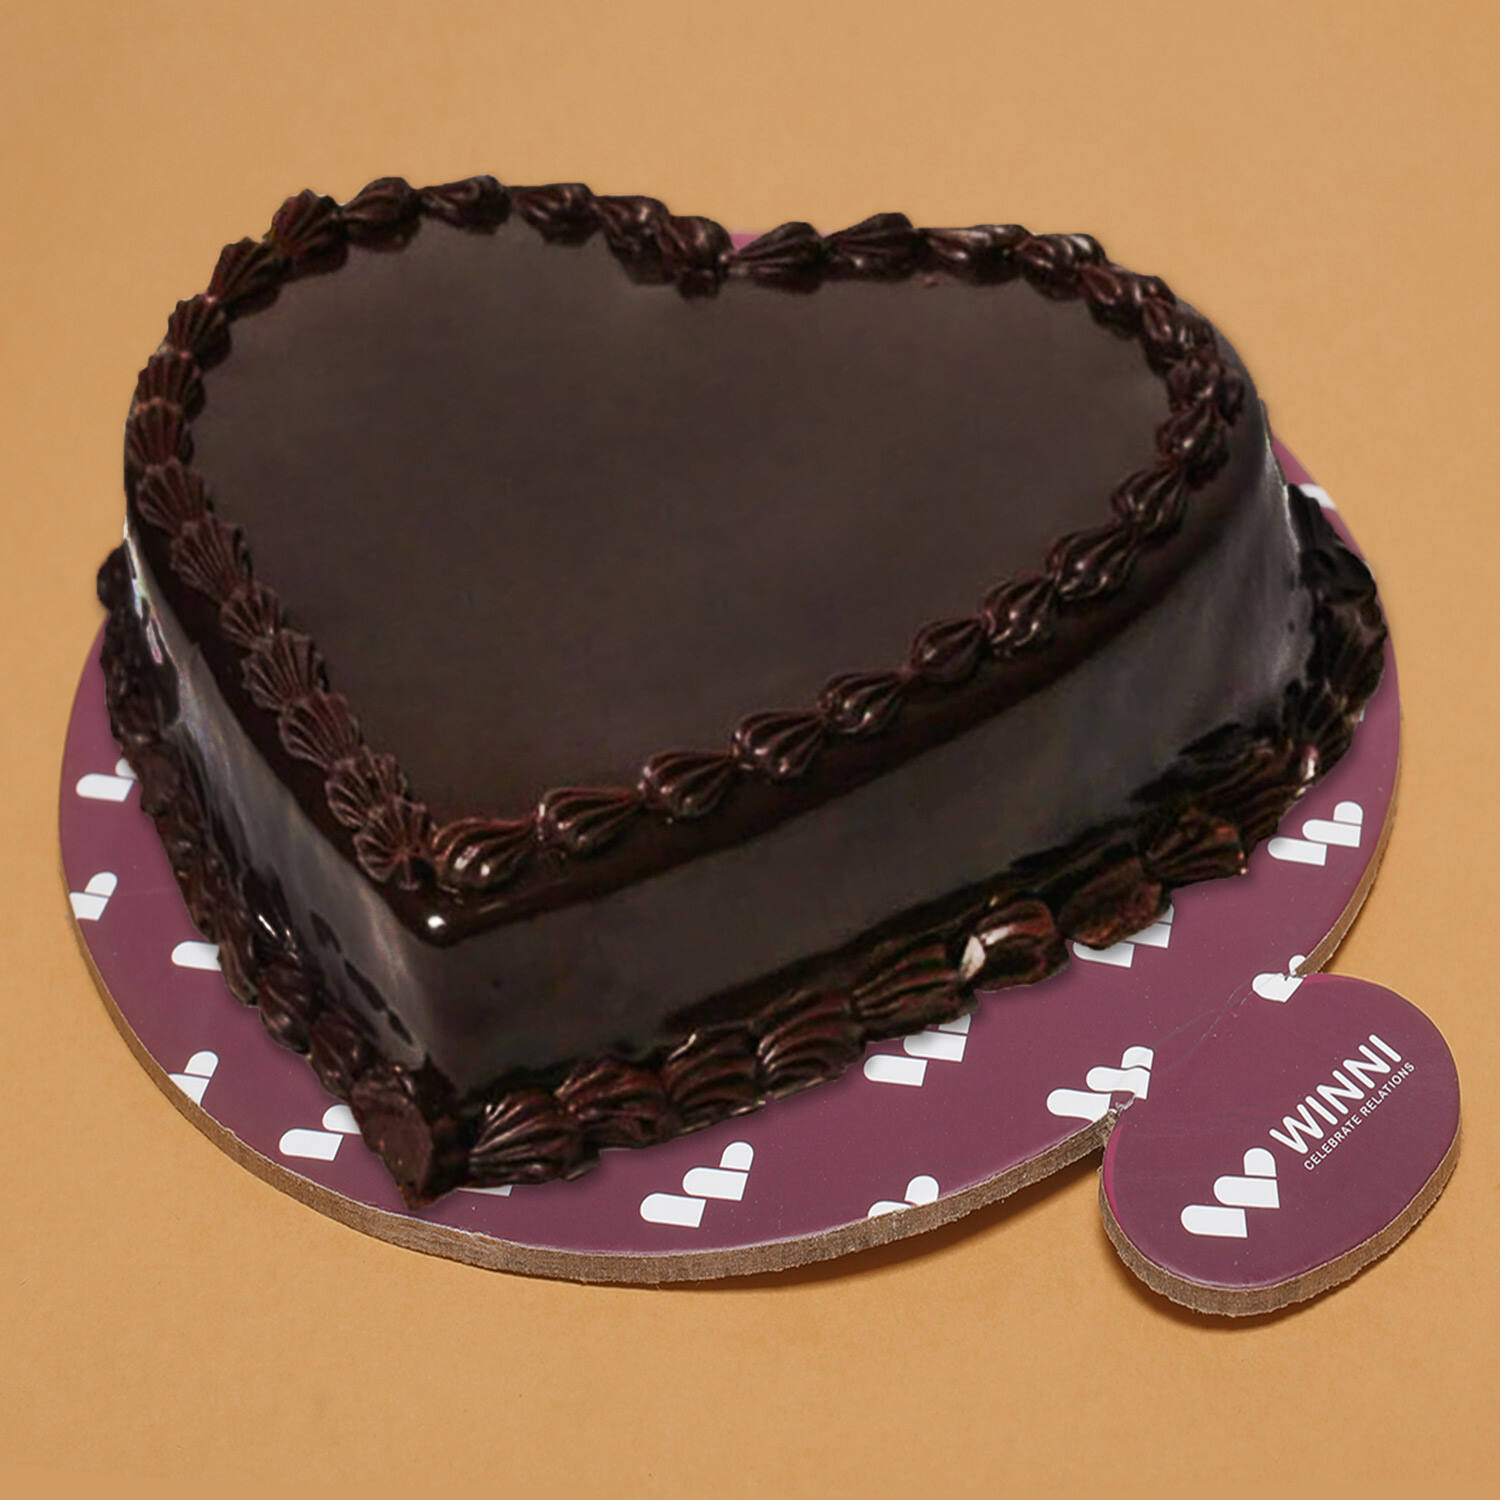 Kids Chocolate Heart Cake